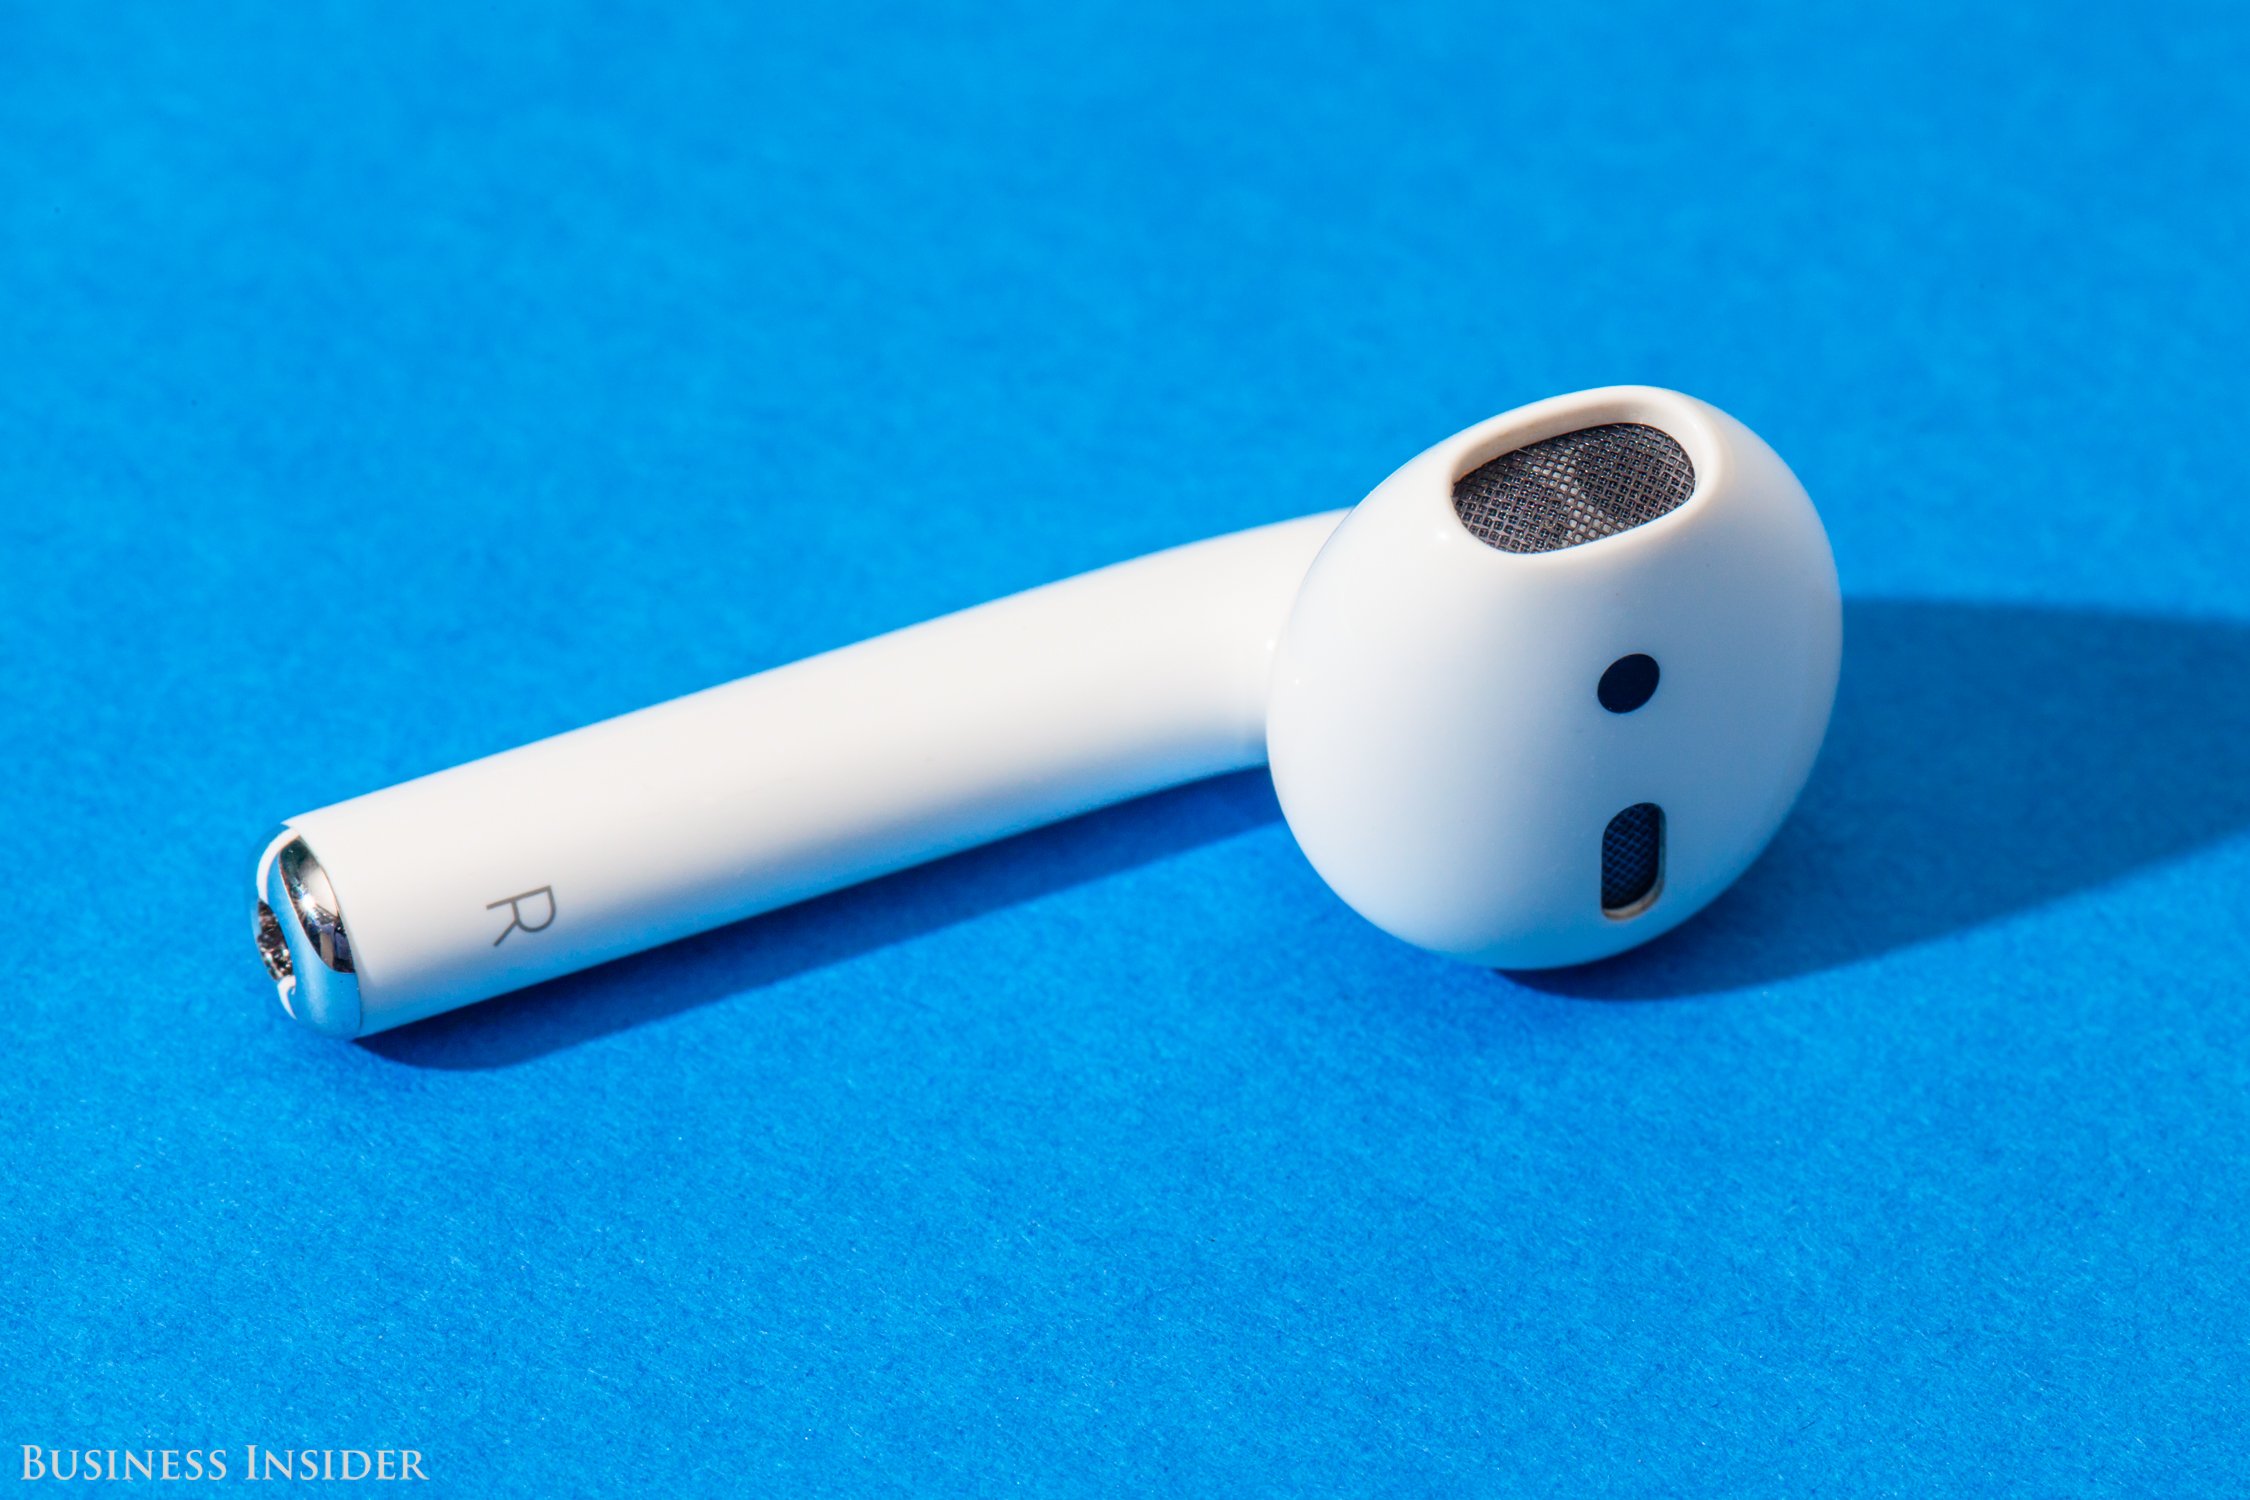 Apple AirPods - nowe słuchawki do iPhone'a